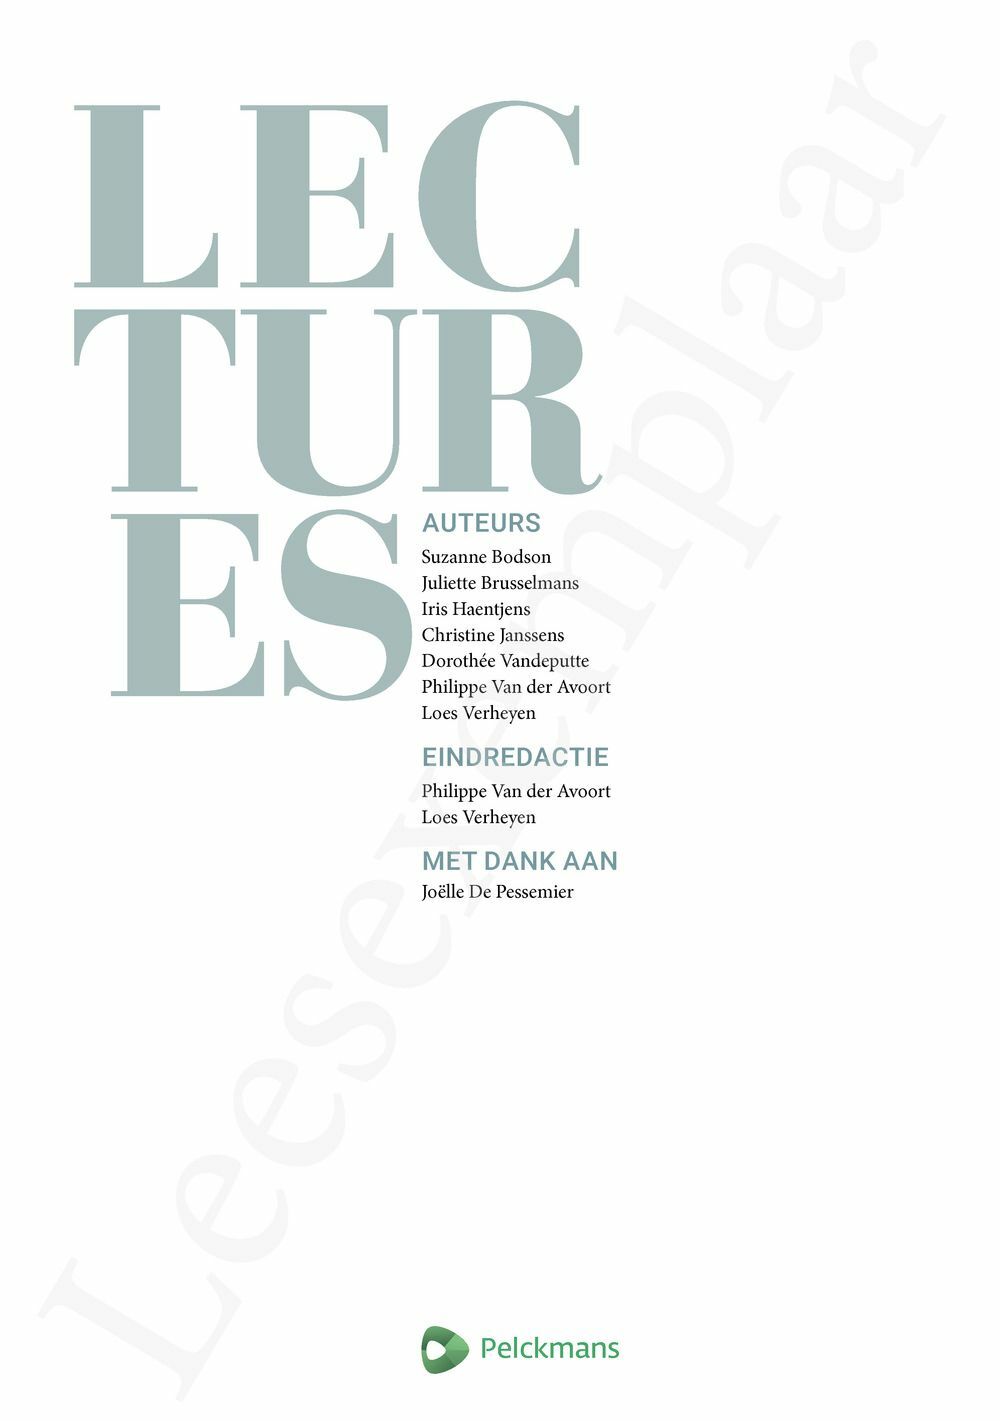 Preview: Quartier français 5 Lectures